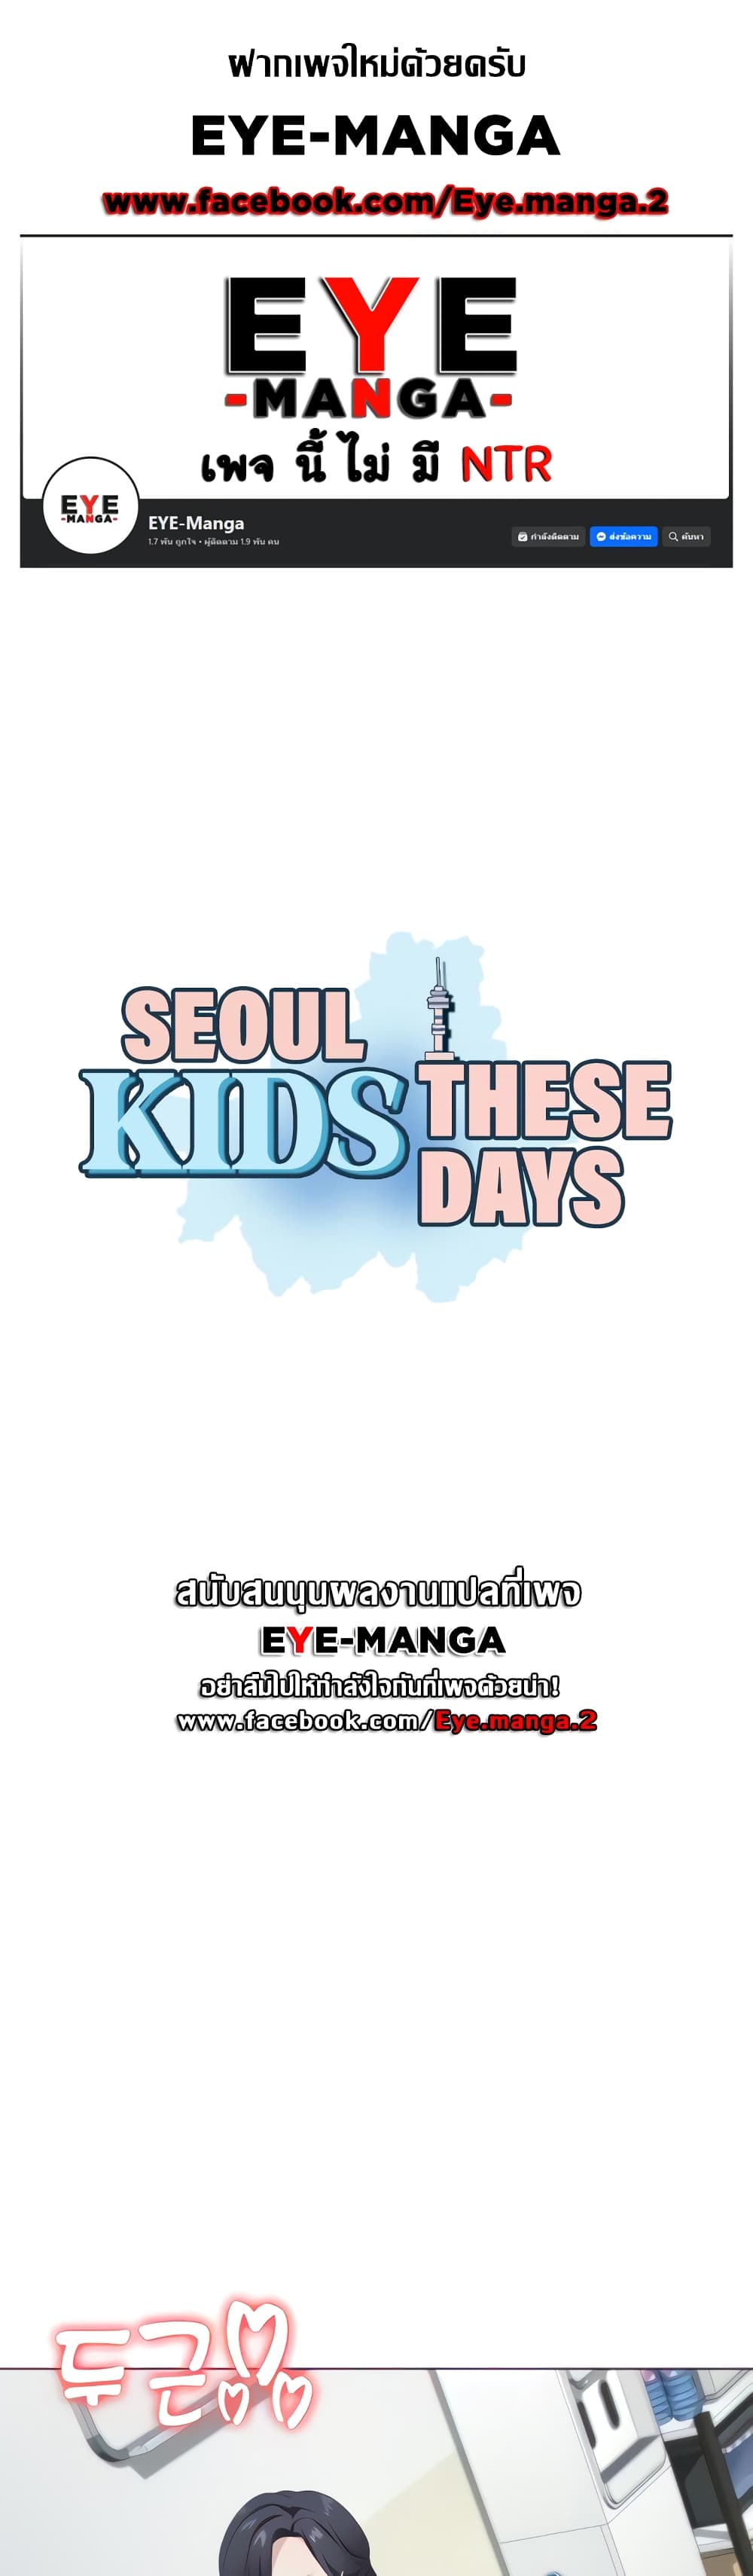 Seoul Kids These Days 16-16